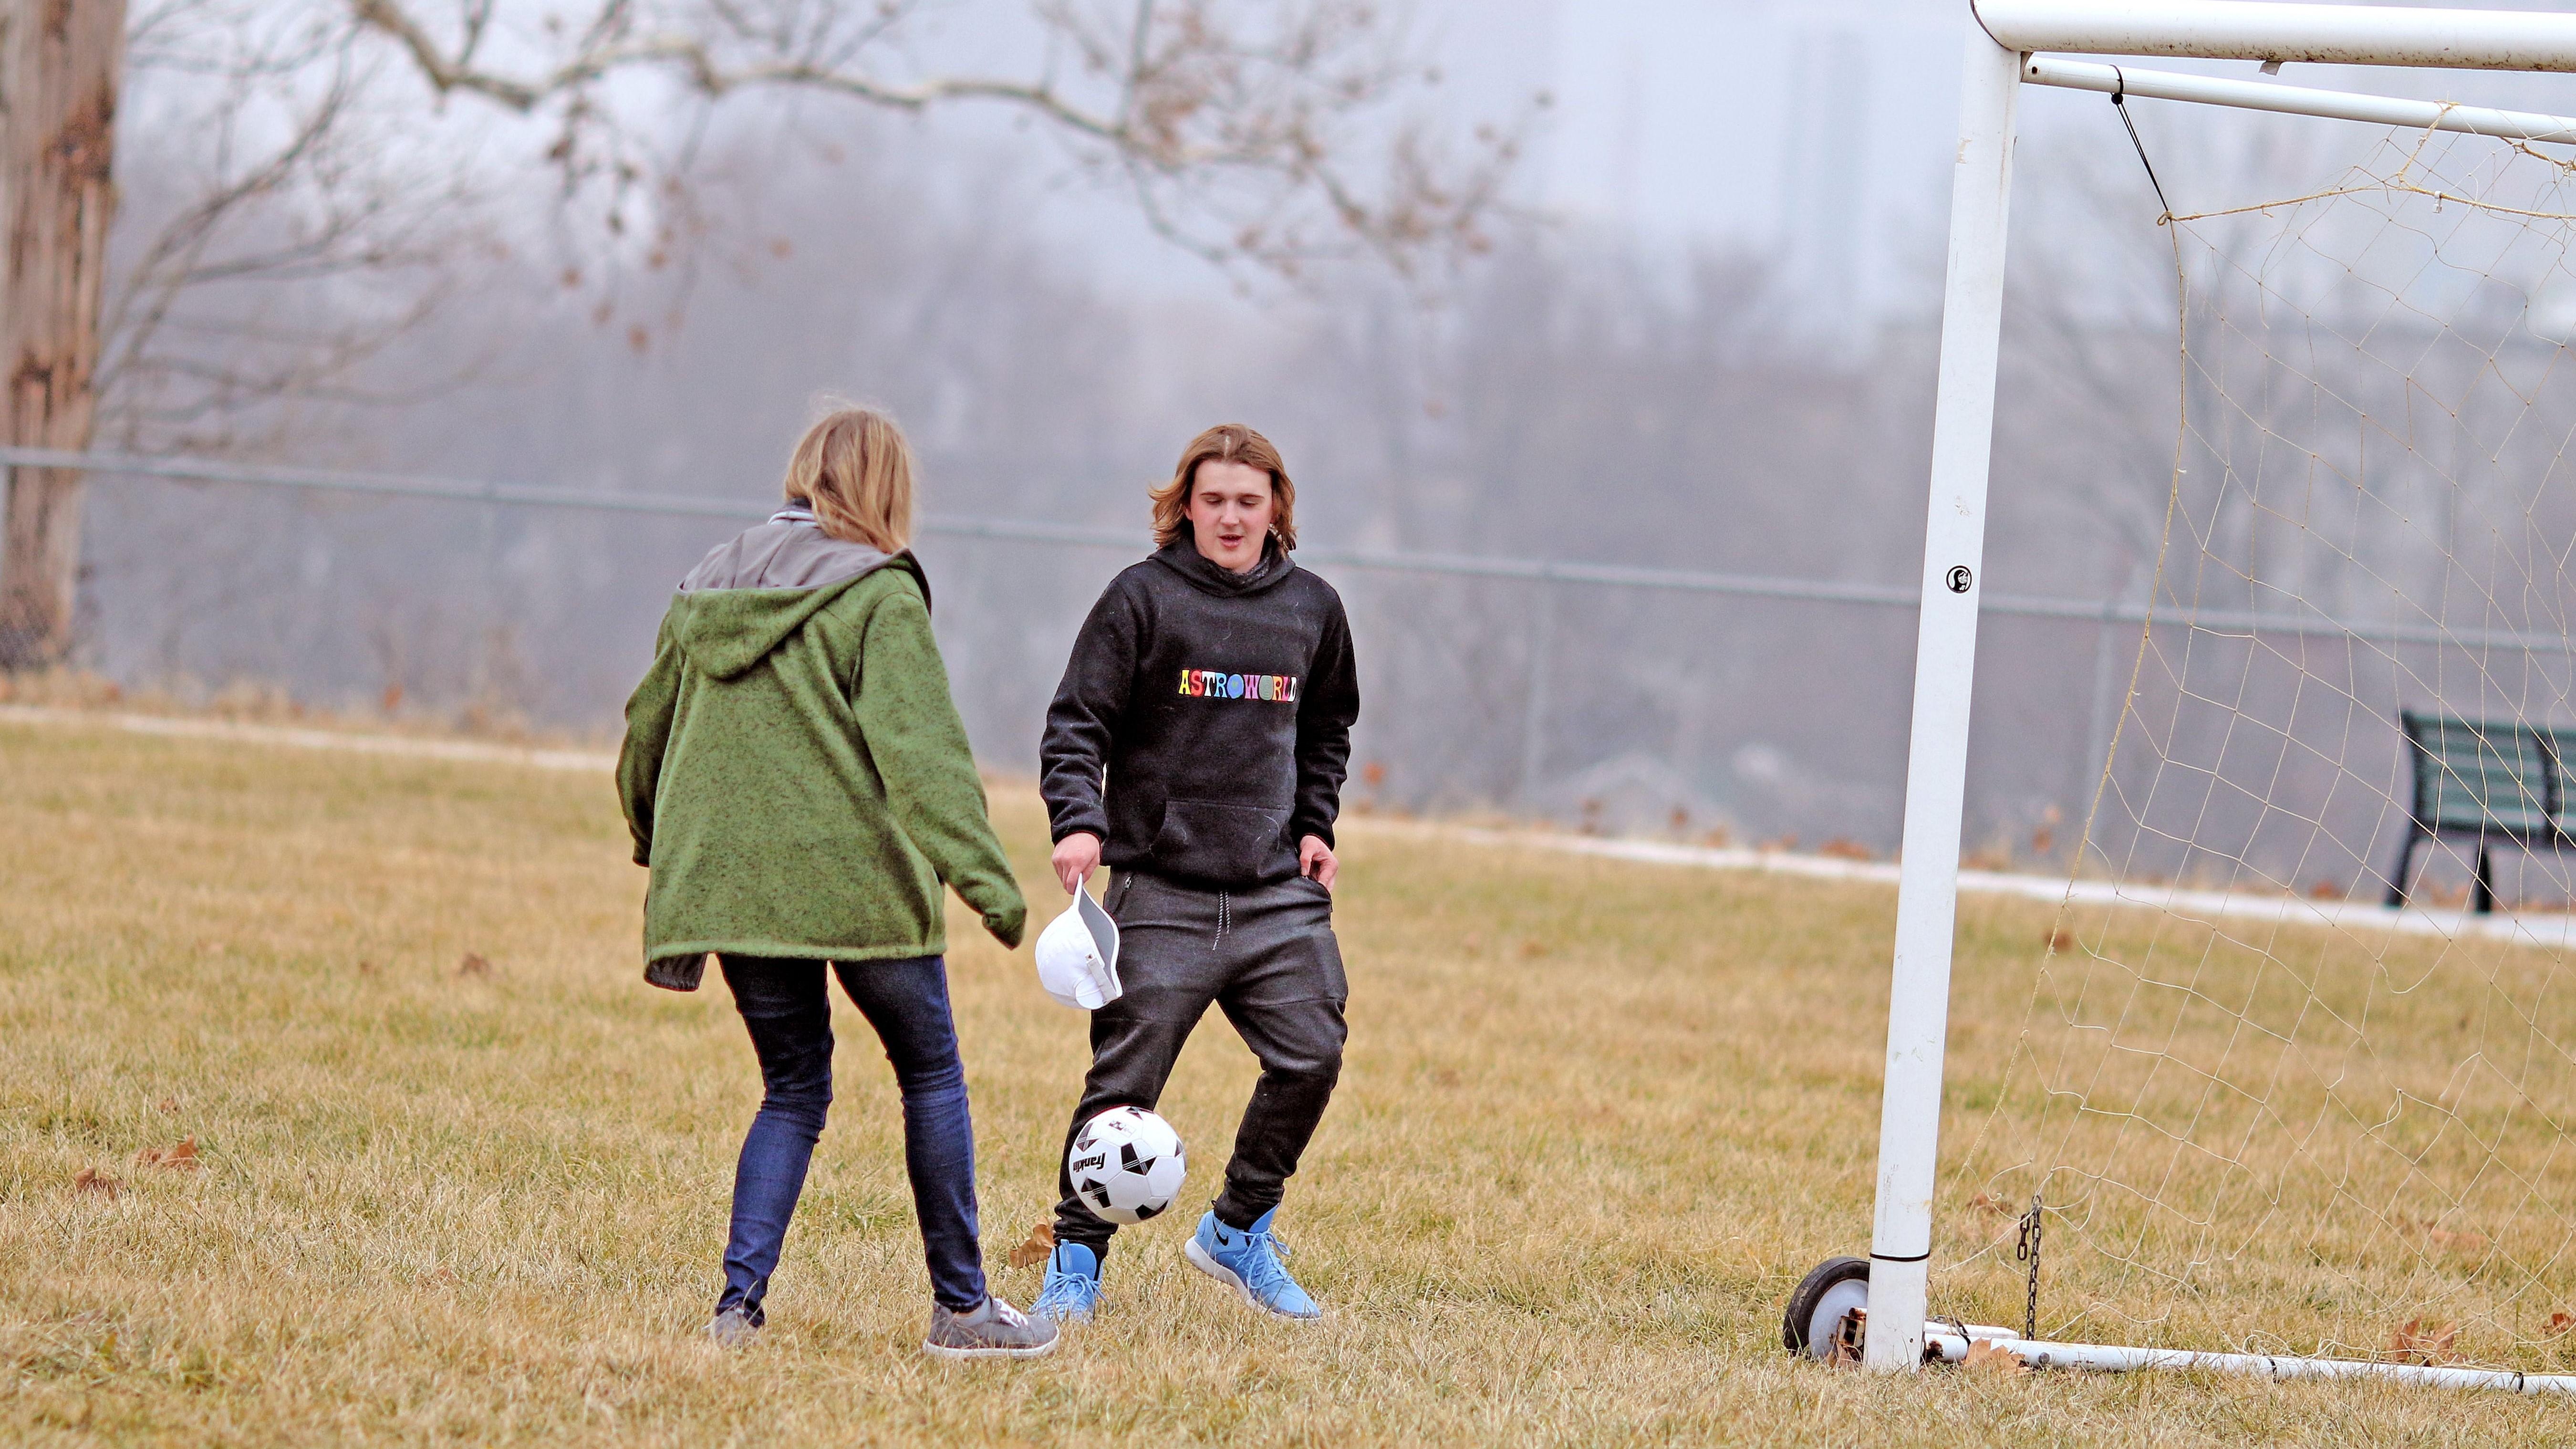 Teens playing Soccer